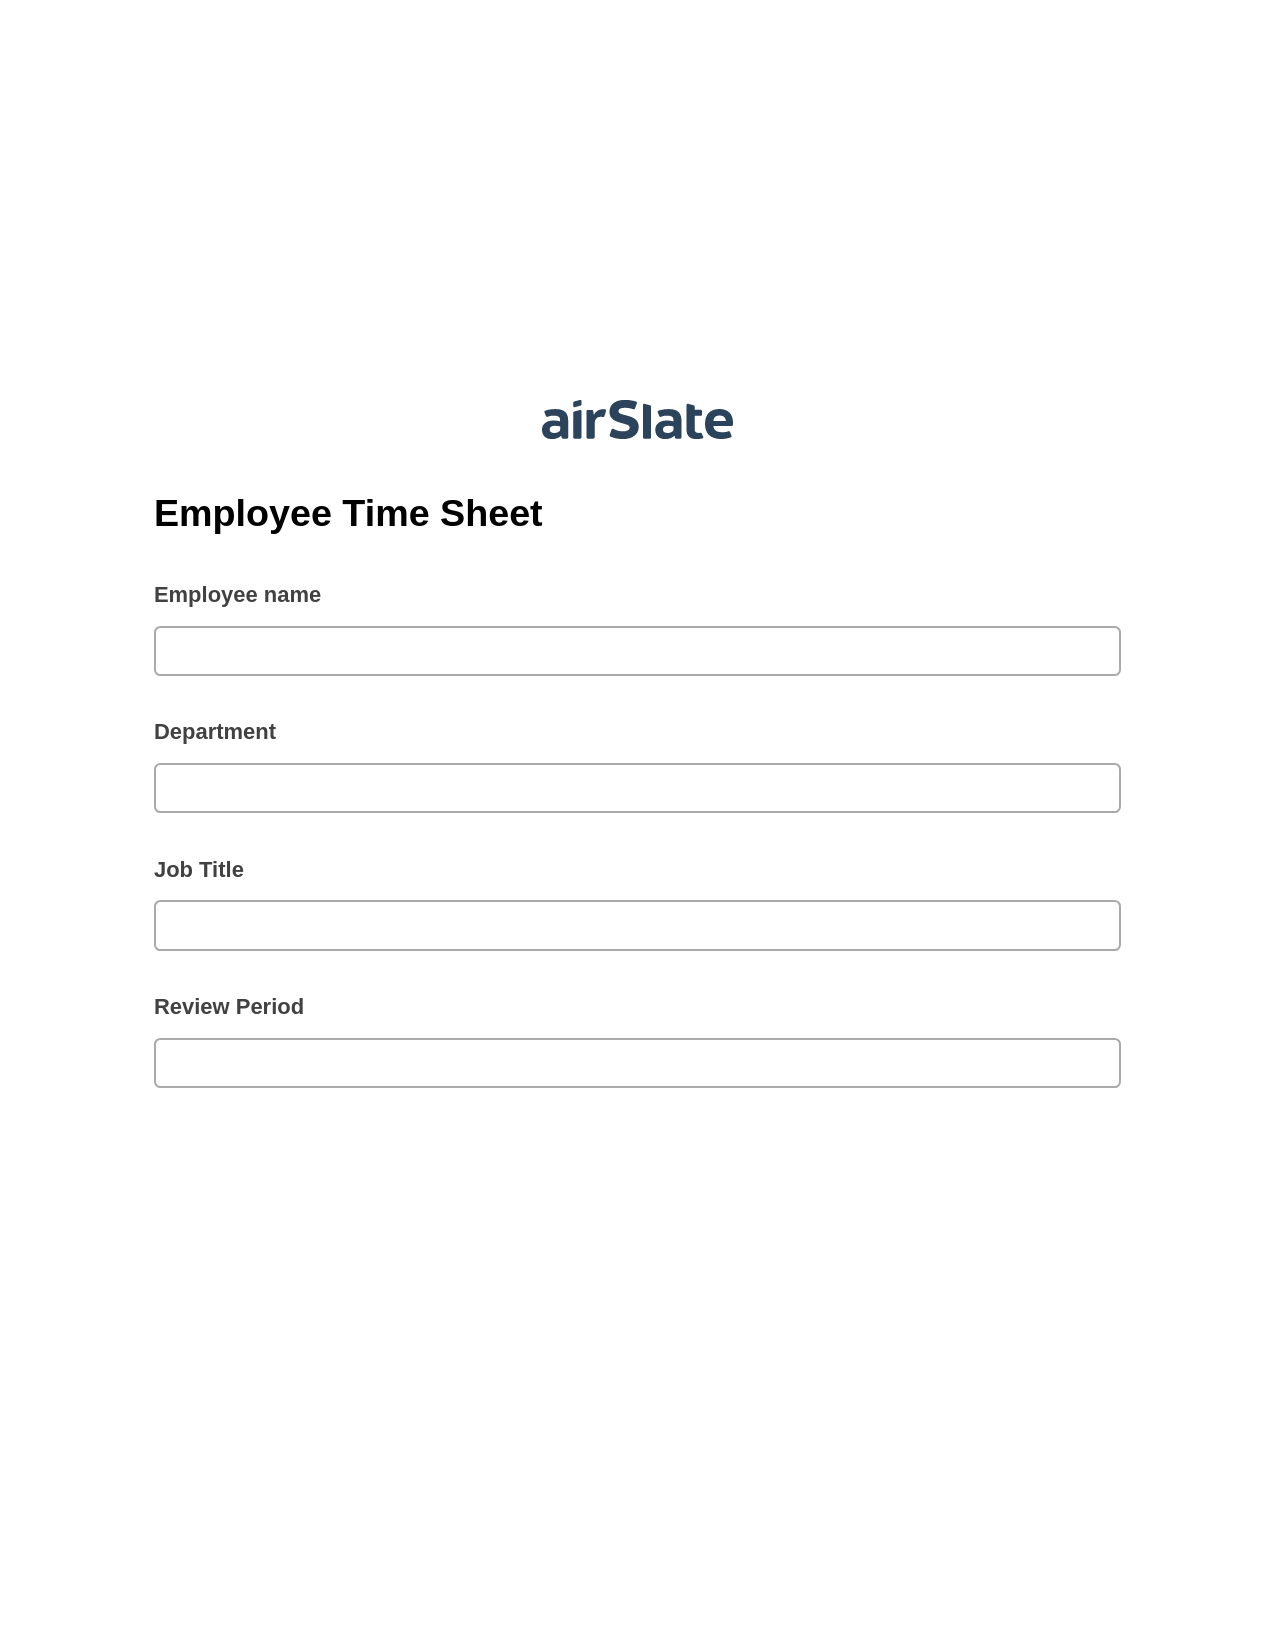 Multirole Employee Time Sheet Pre-fill from Excel Spreadsheet Bot, Create Salesforce Records Bot, Slack Notification Postfinish Bot